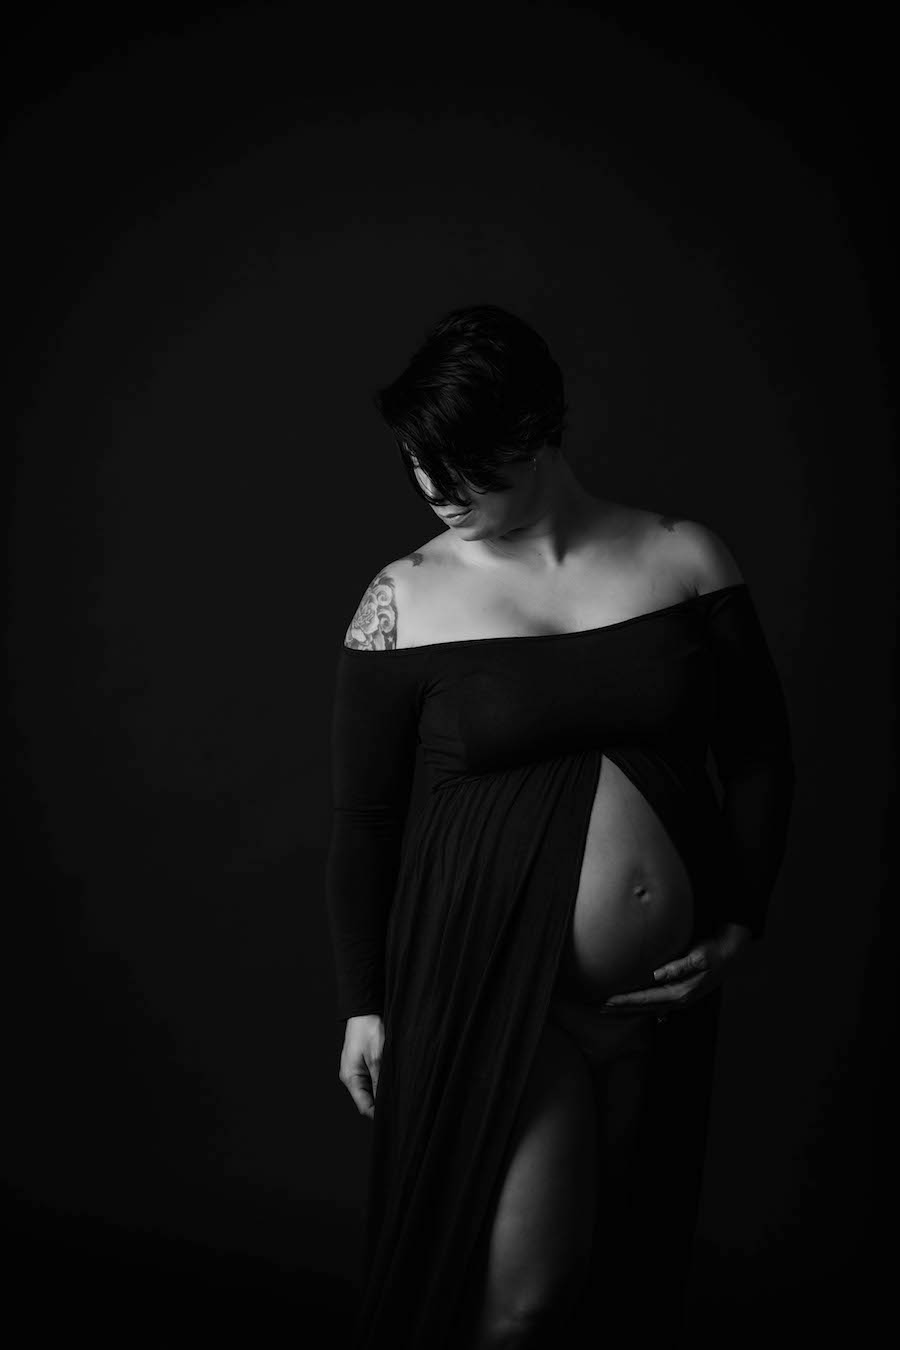 Maternity dress open showing belly